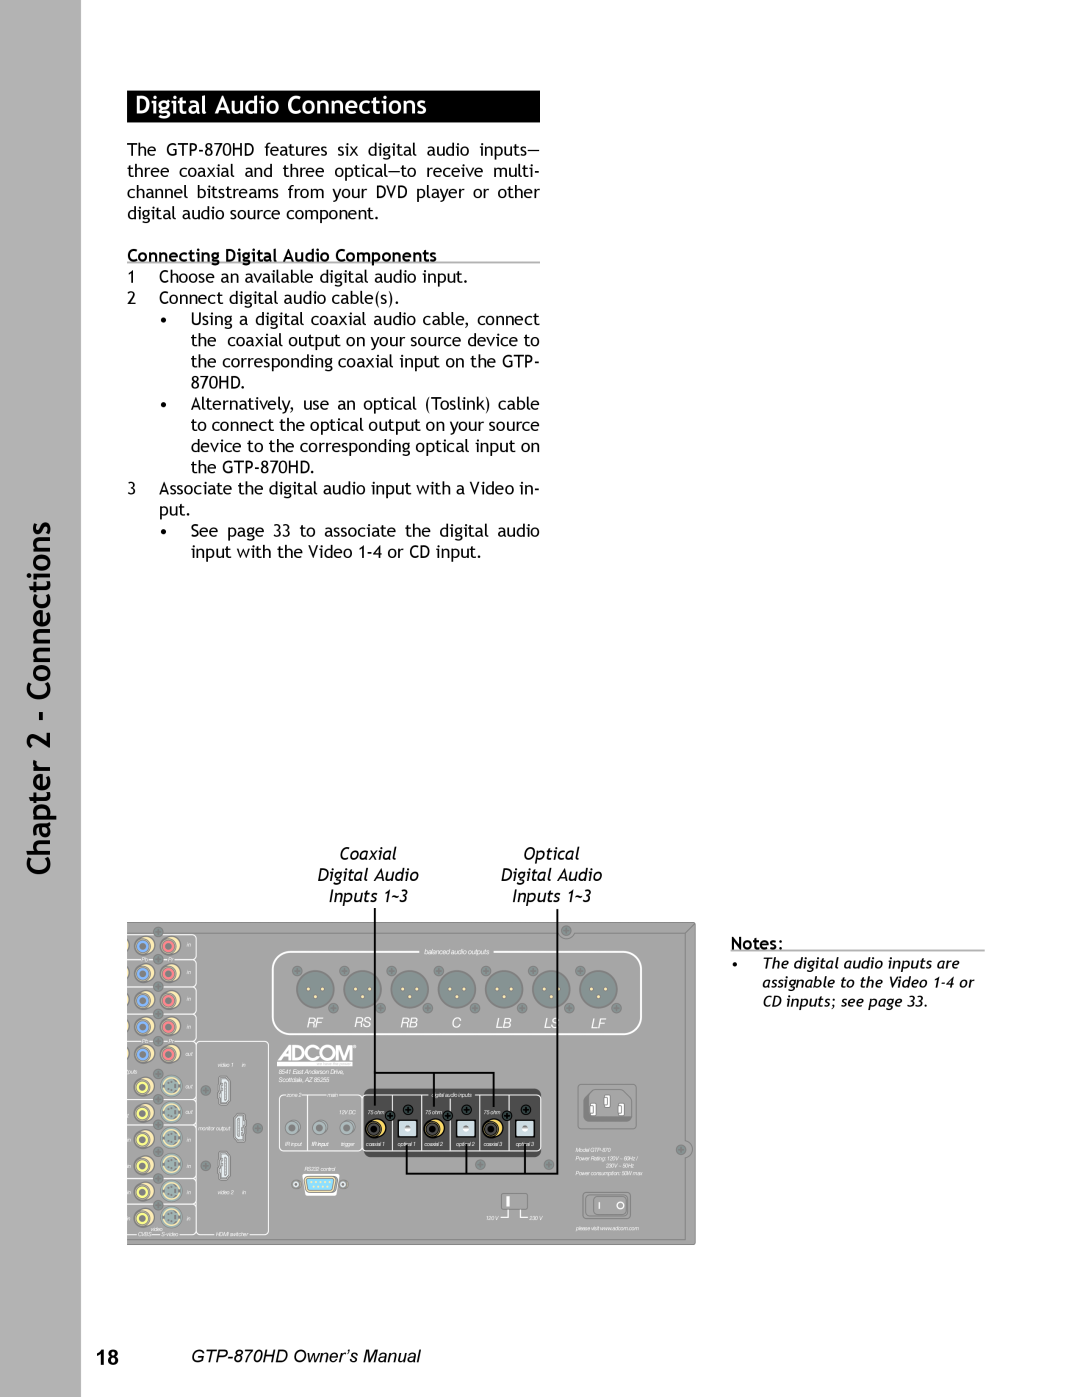 Adcom GTP-870HD user manual Digital Audio Connections, Connecting Digital Audio Components, Coaxial, Optical, Notes 